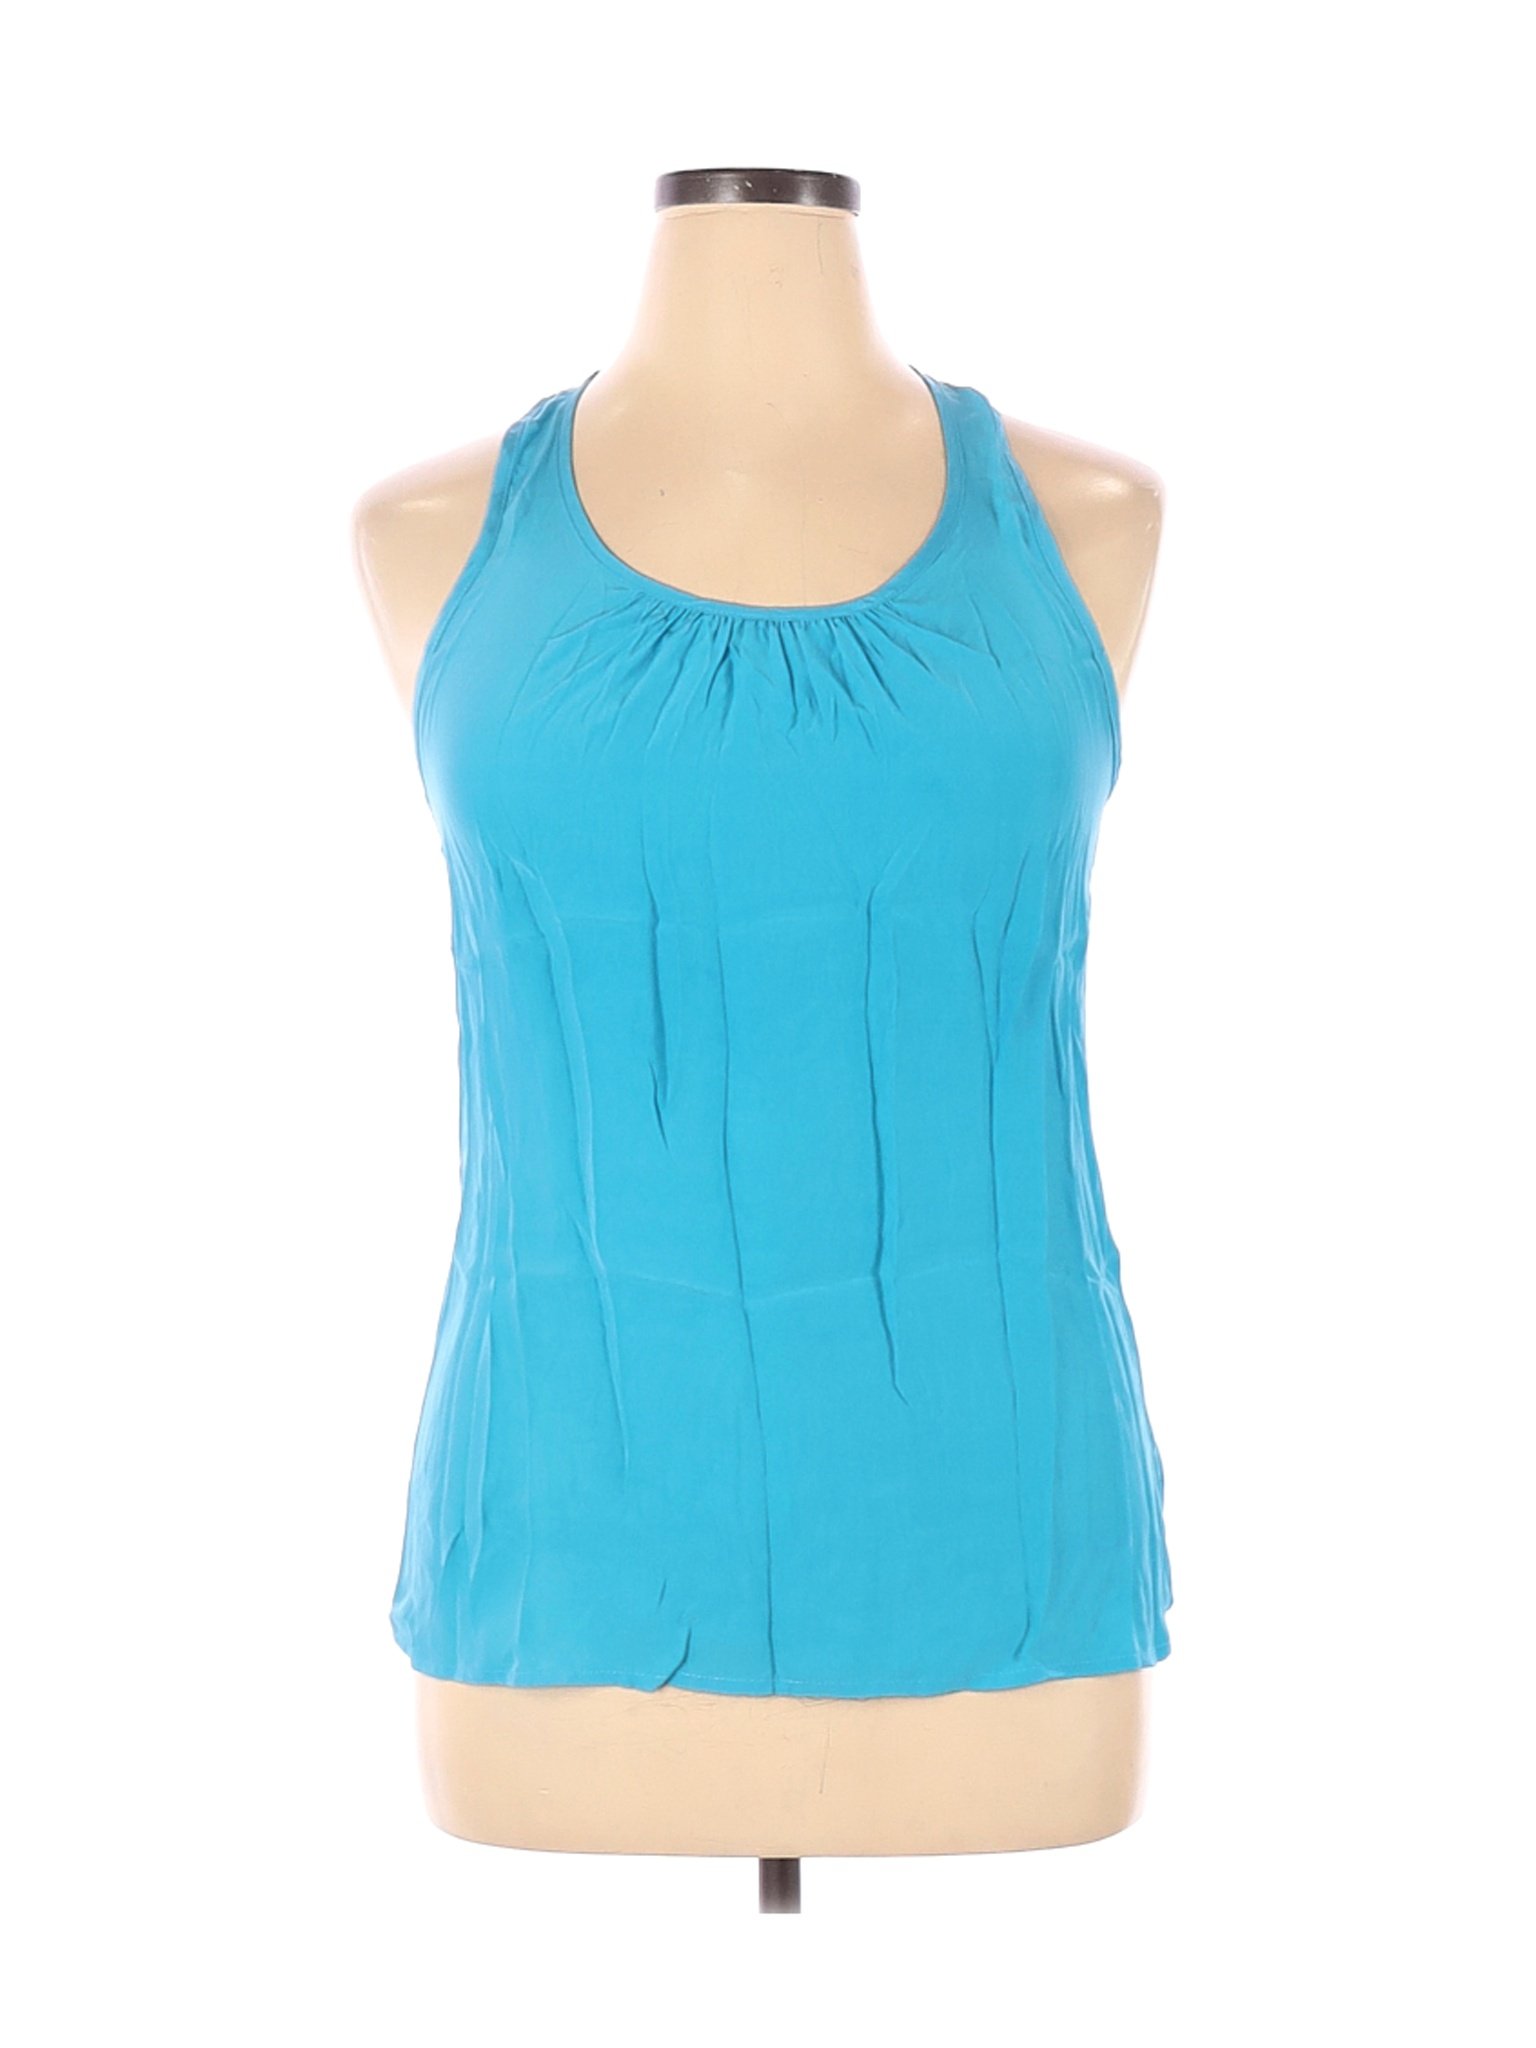 NWT Britt Ryan Women Blue Sleeveless Silk Top L | eBay